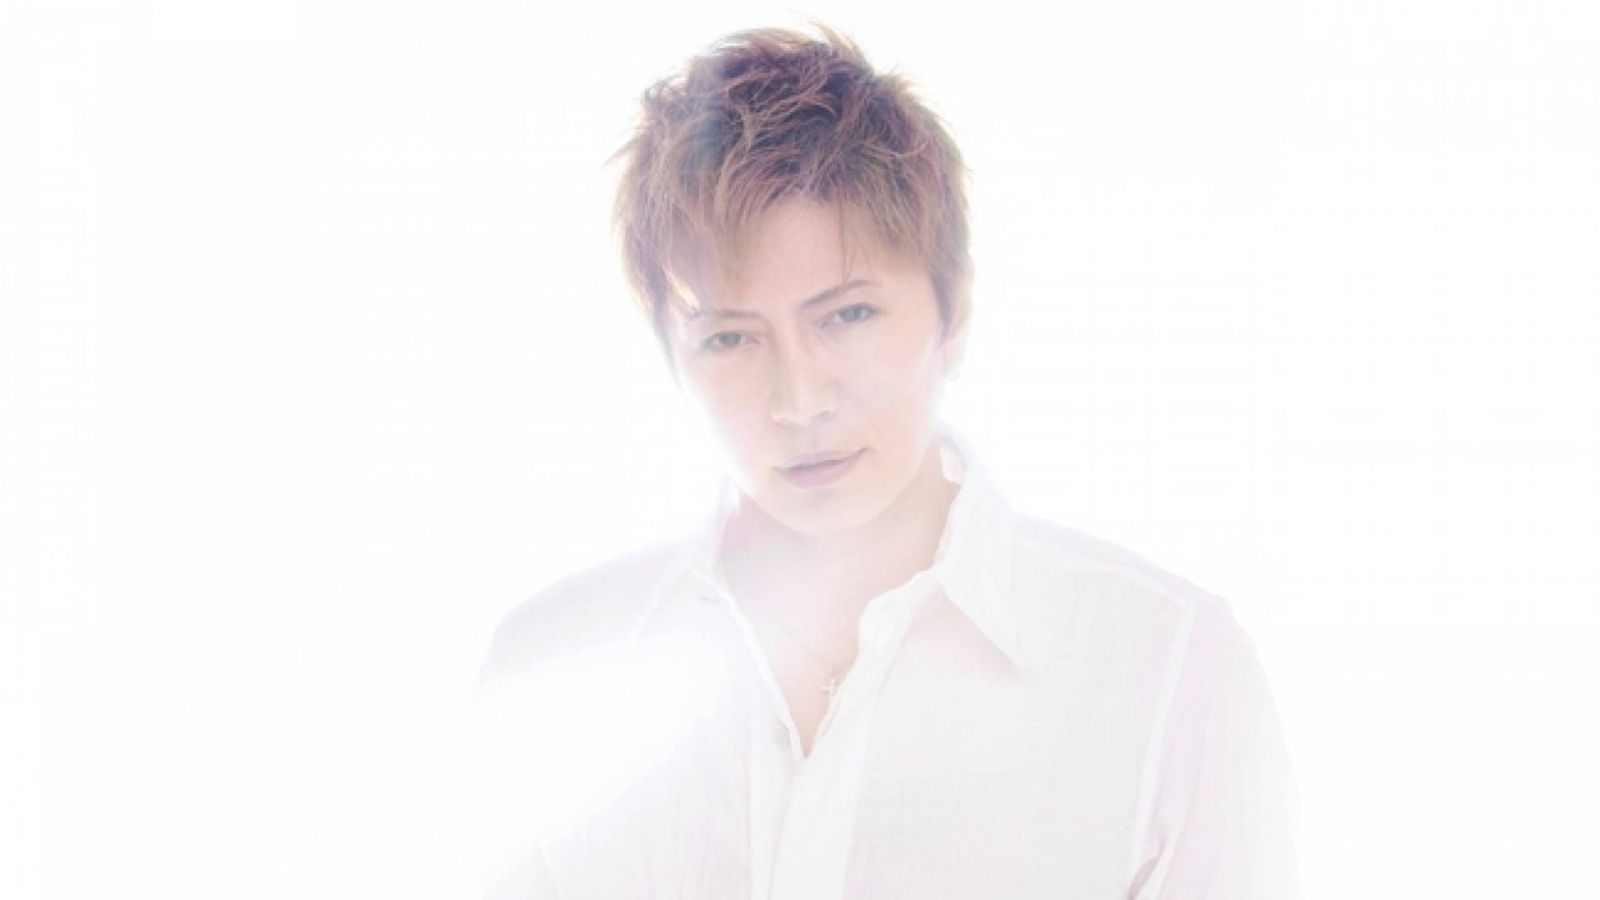 Gackt perd connaissance pendant son dernier concert à Nagoya © G-PRO. All Rights Reserved.